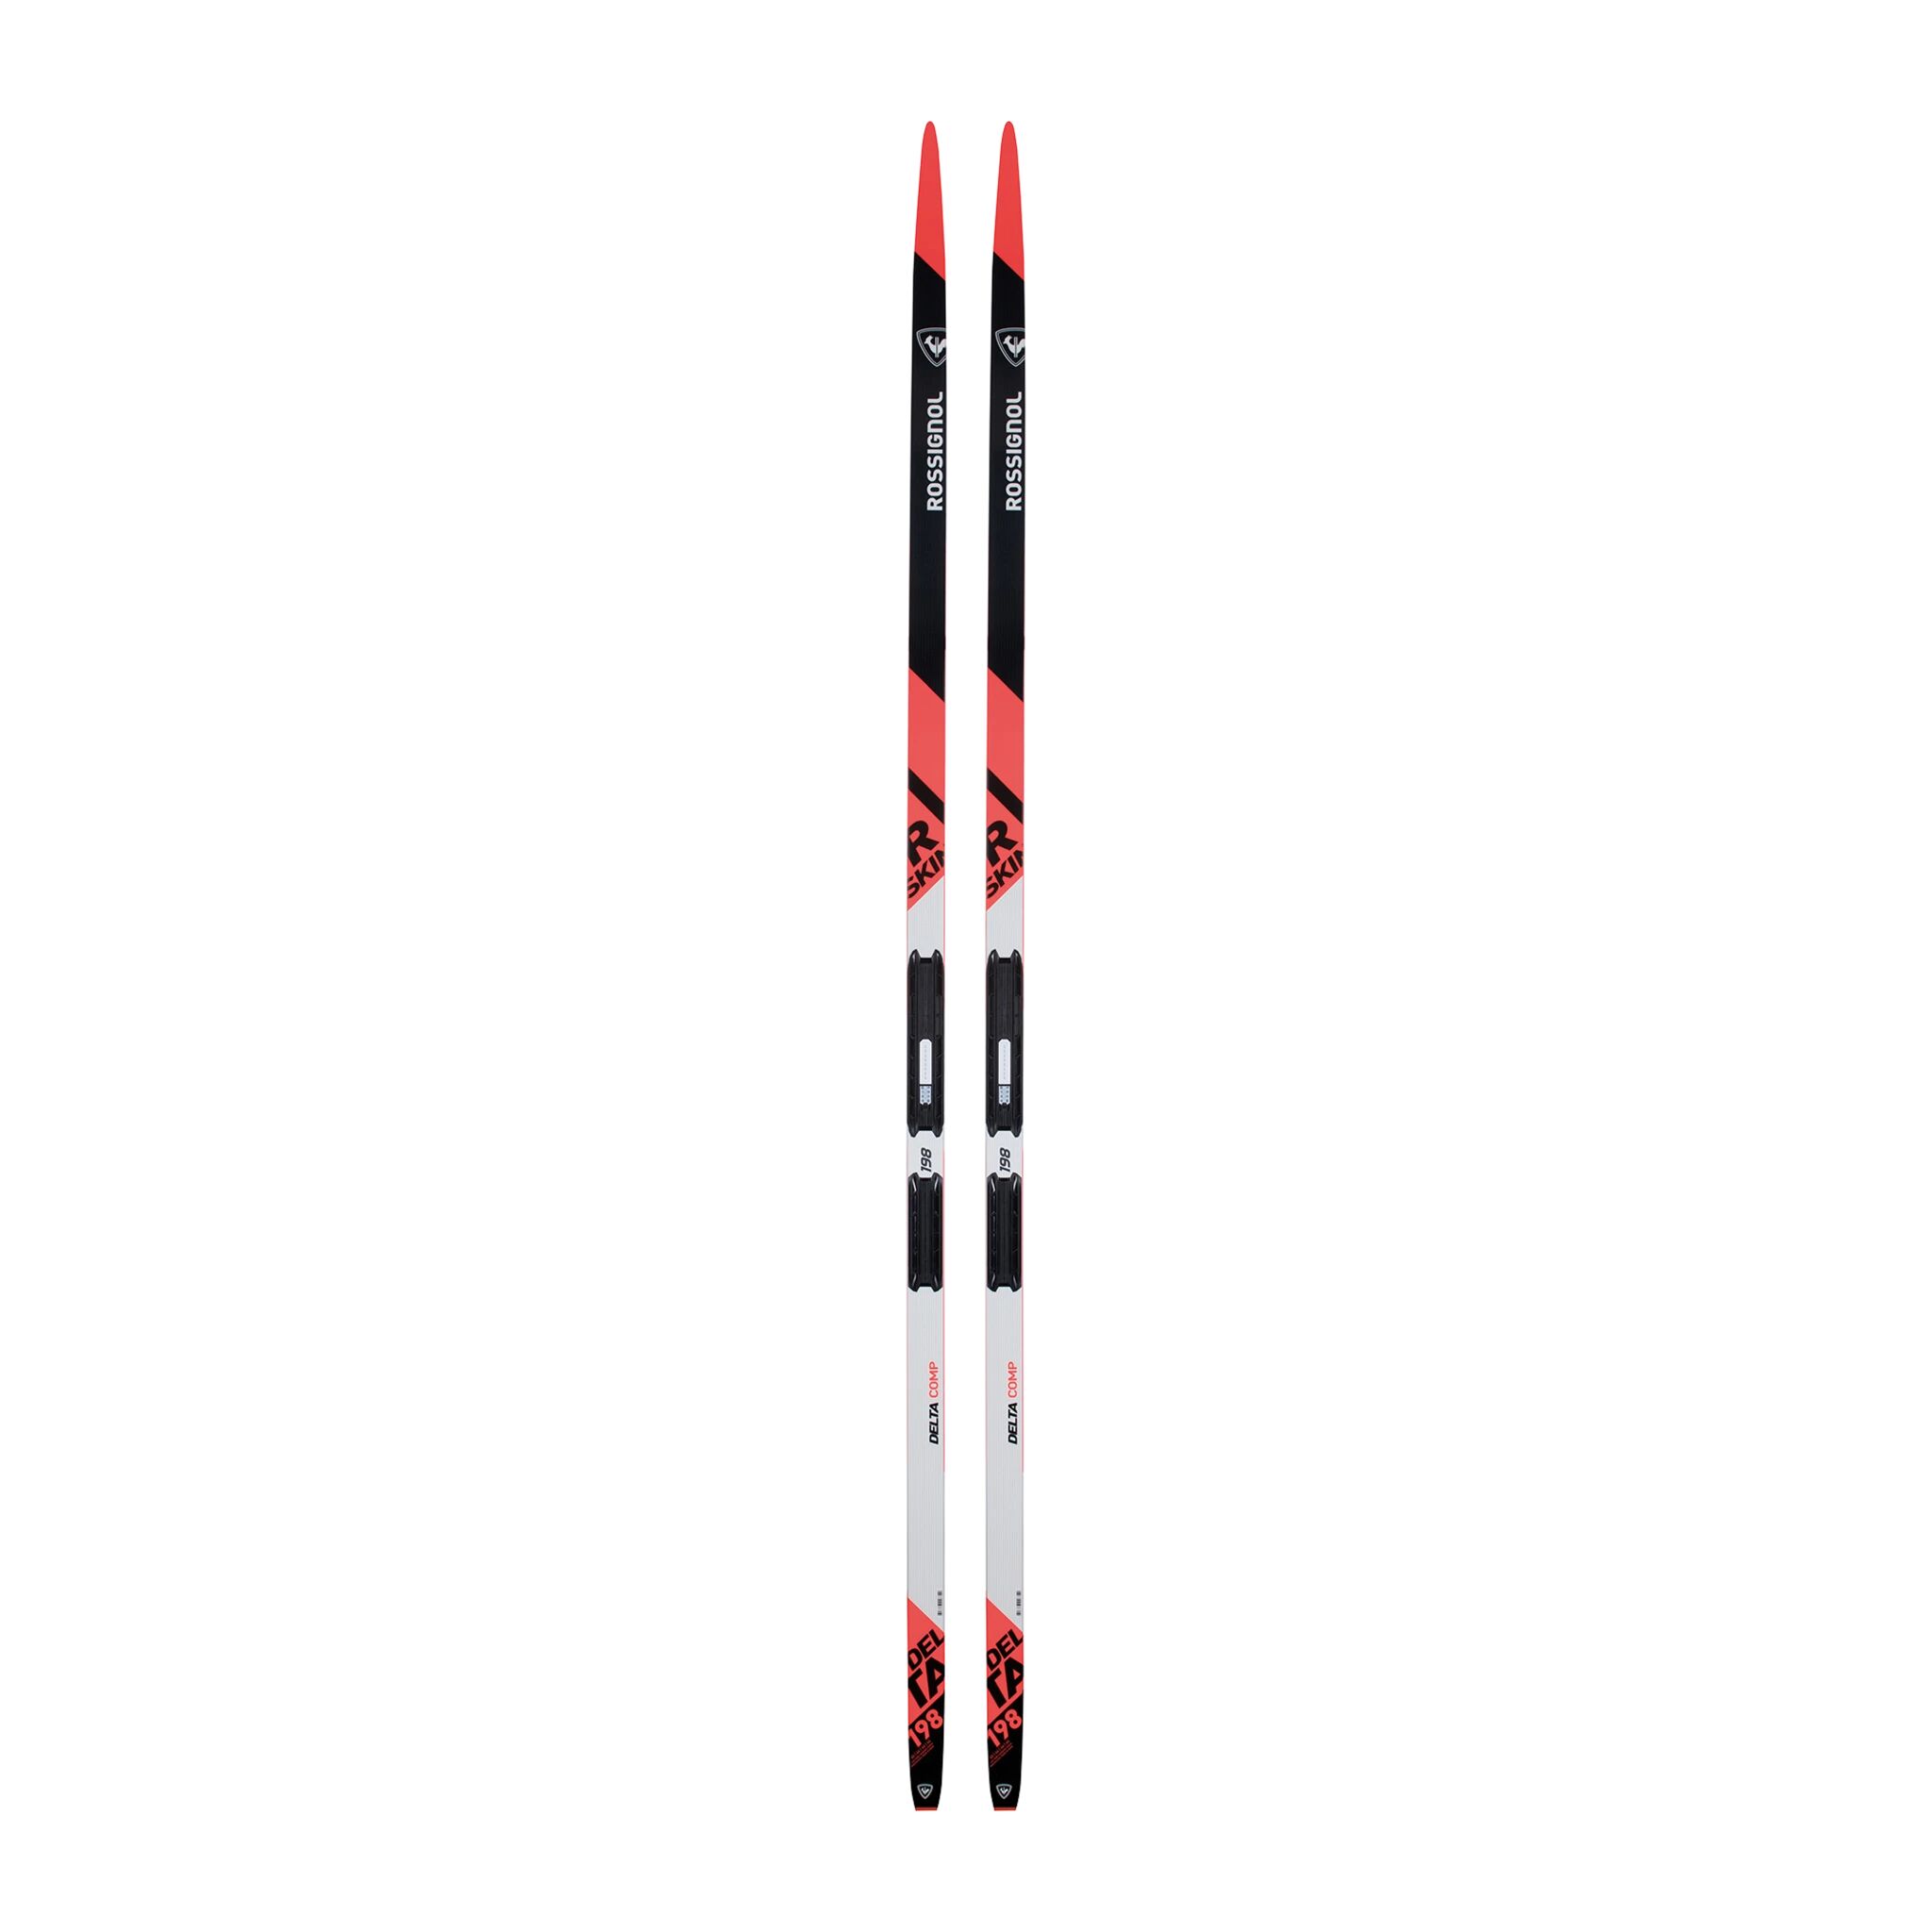 Rossignol XC Skis R-Skin Delta Comp -IFP 21/22, felleski unisex 191cm Stiff/60-80kg White/Red